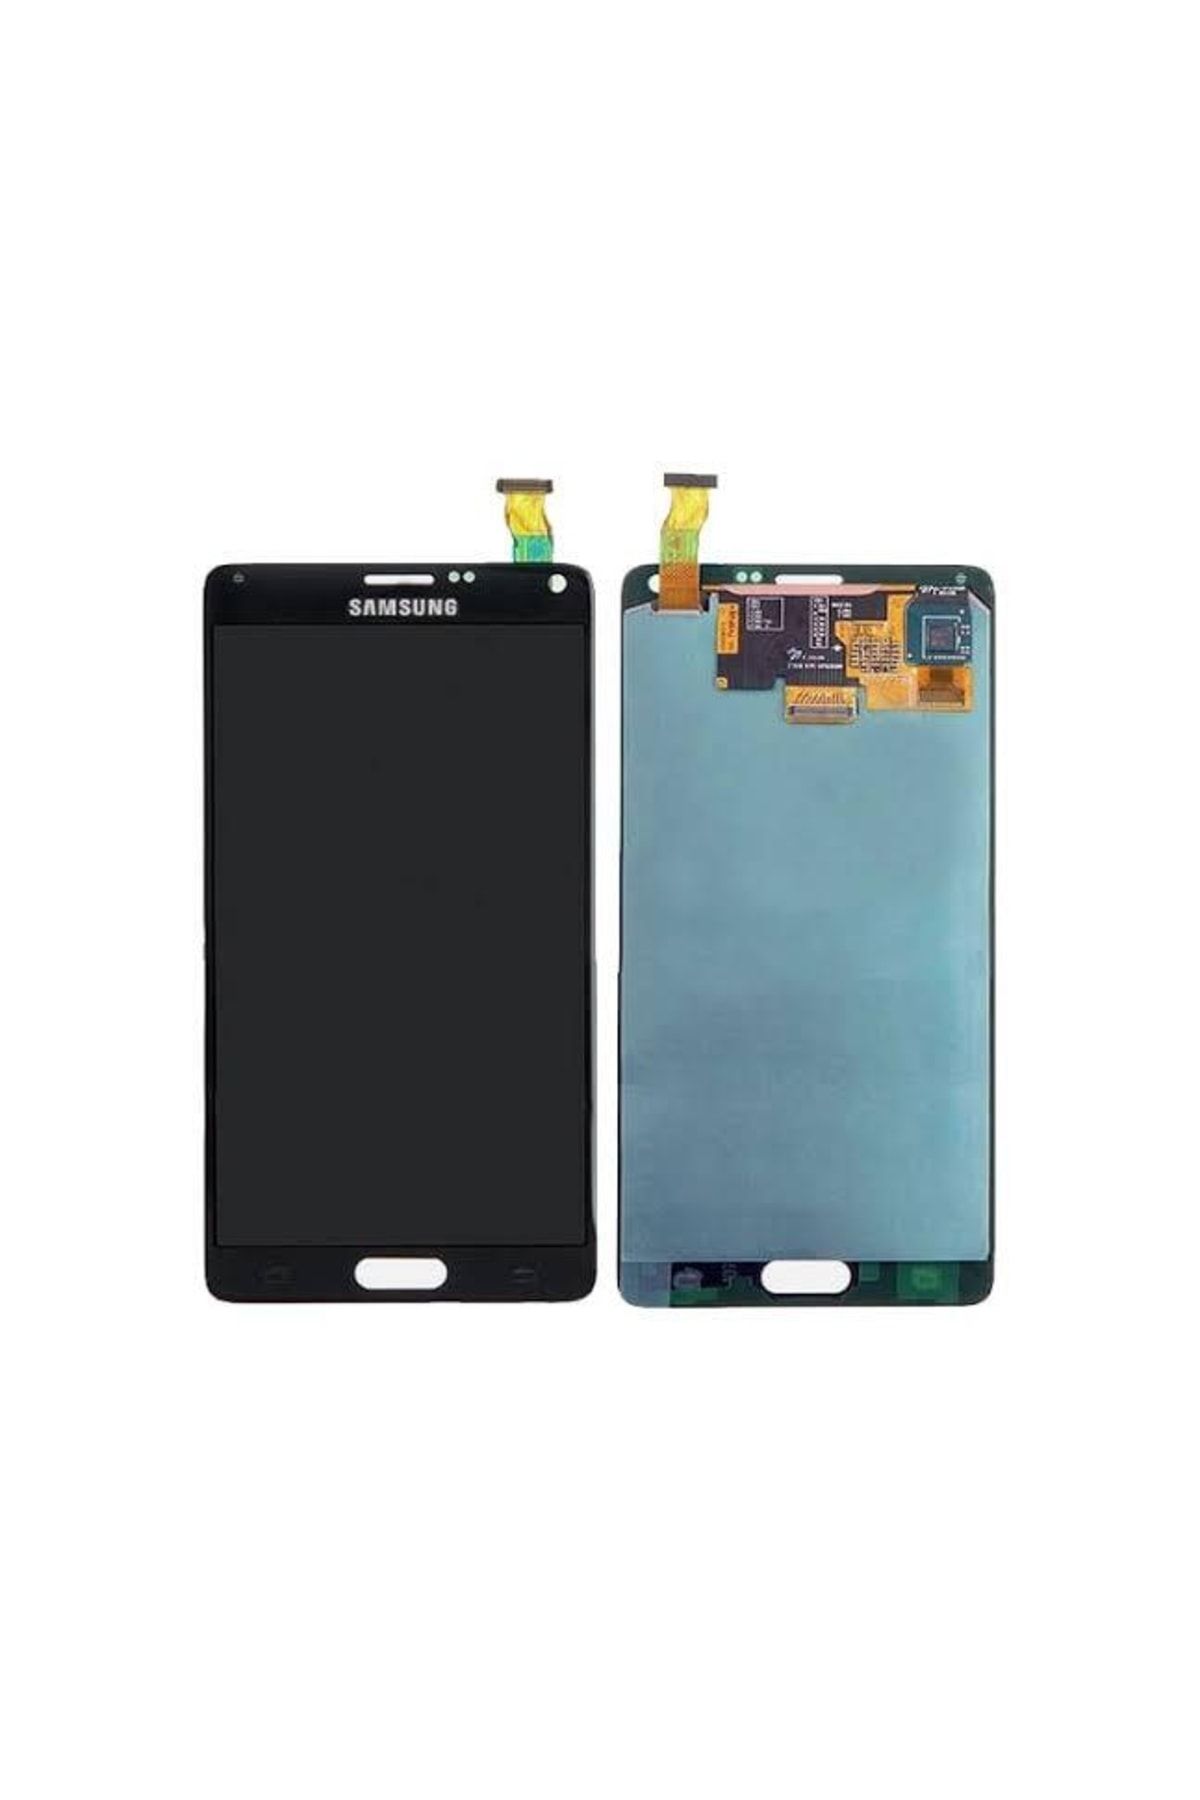 ELİT16 Samsung Note 4 Orijinal Servis Ekran